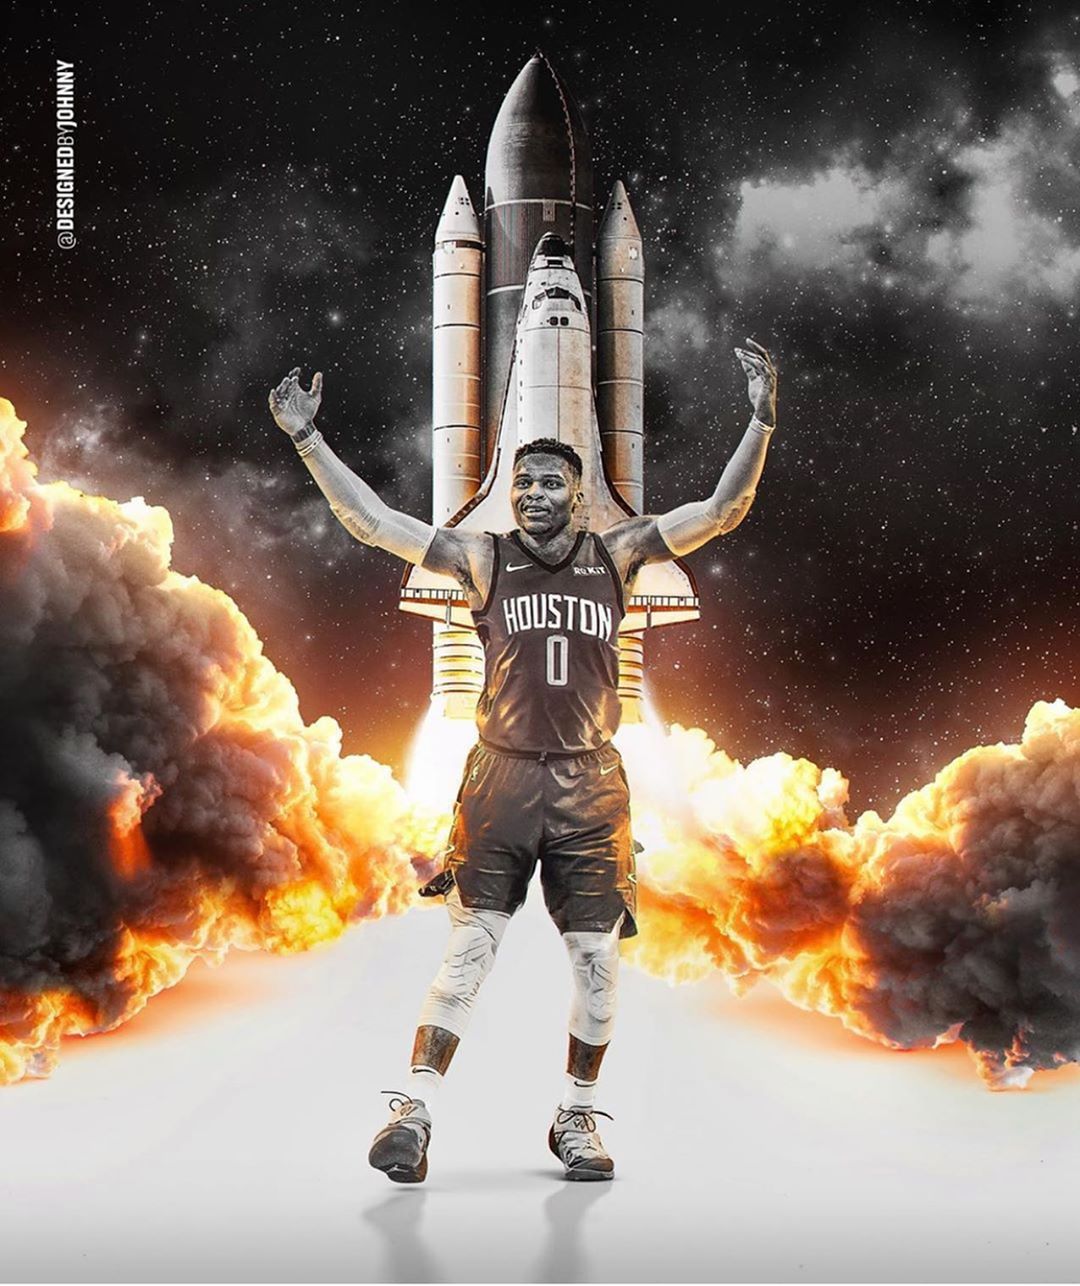 Image may contain: fire and text. Houston rockets, Nba basketball art, Nba art